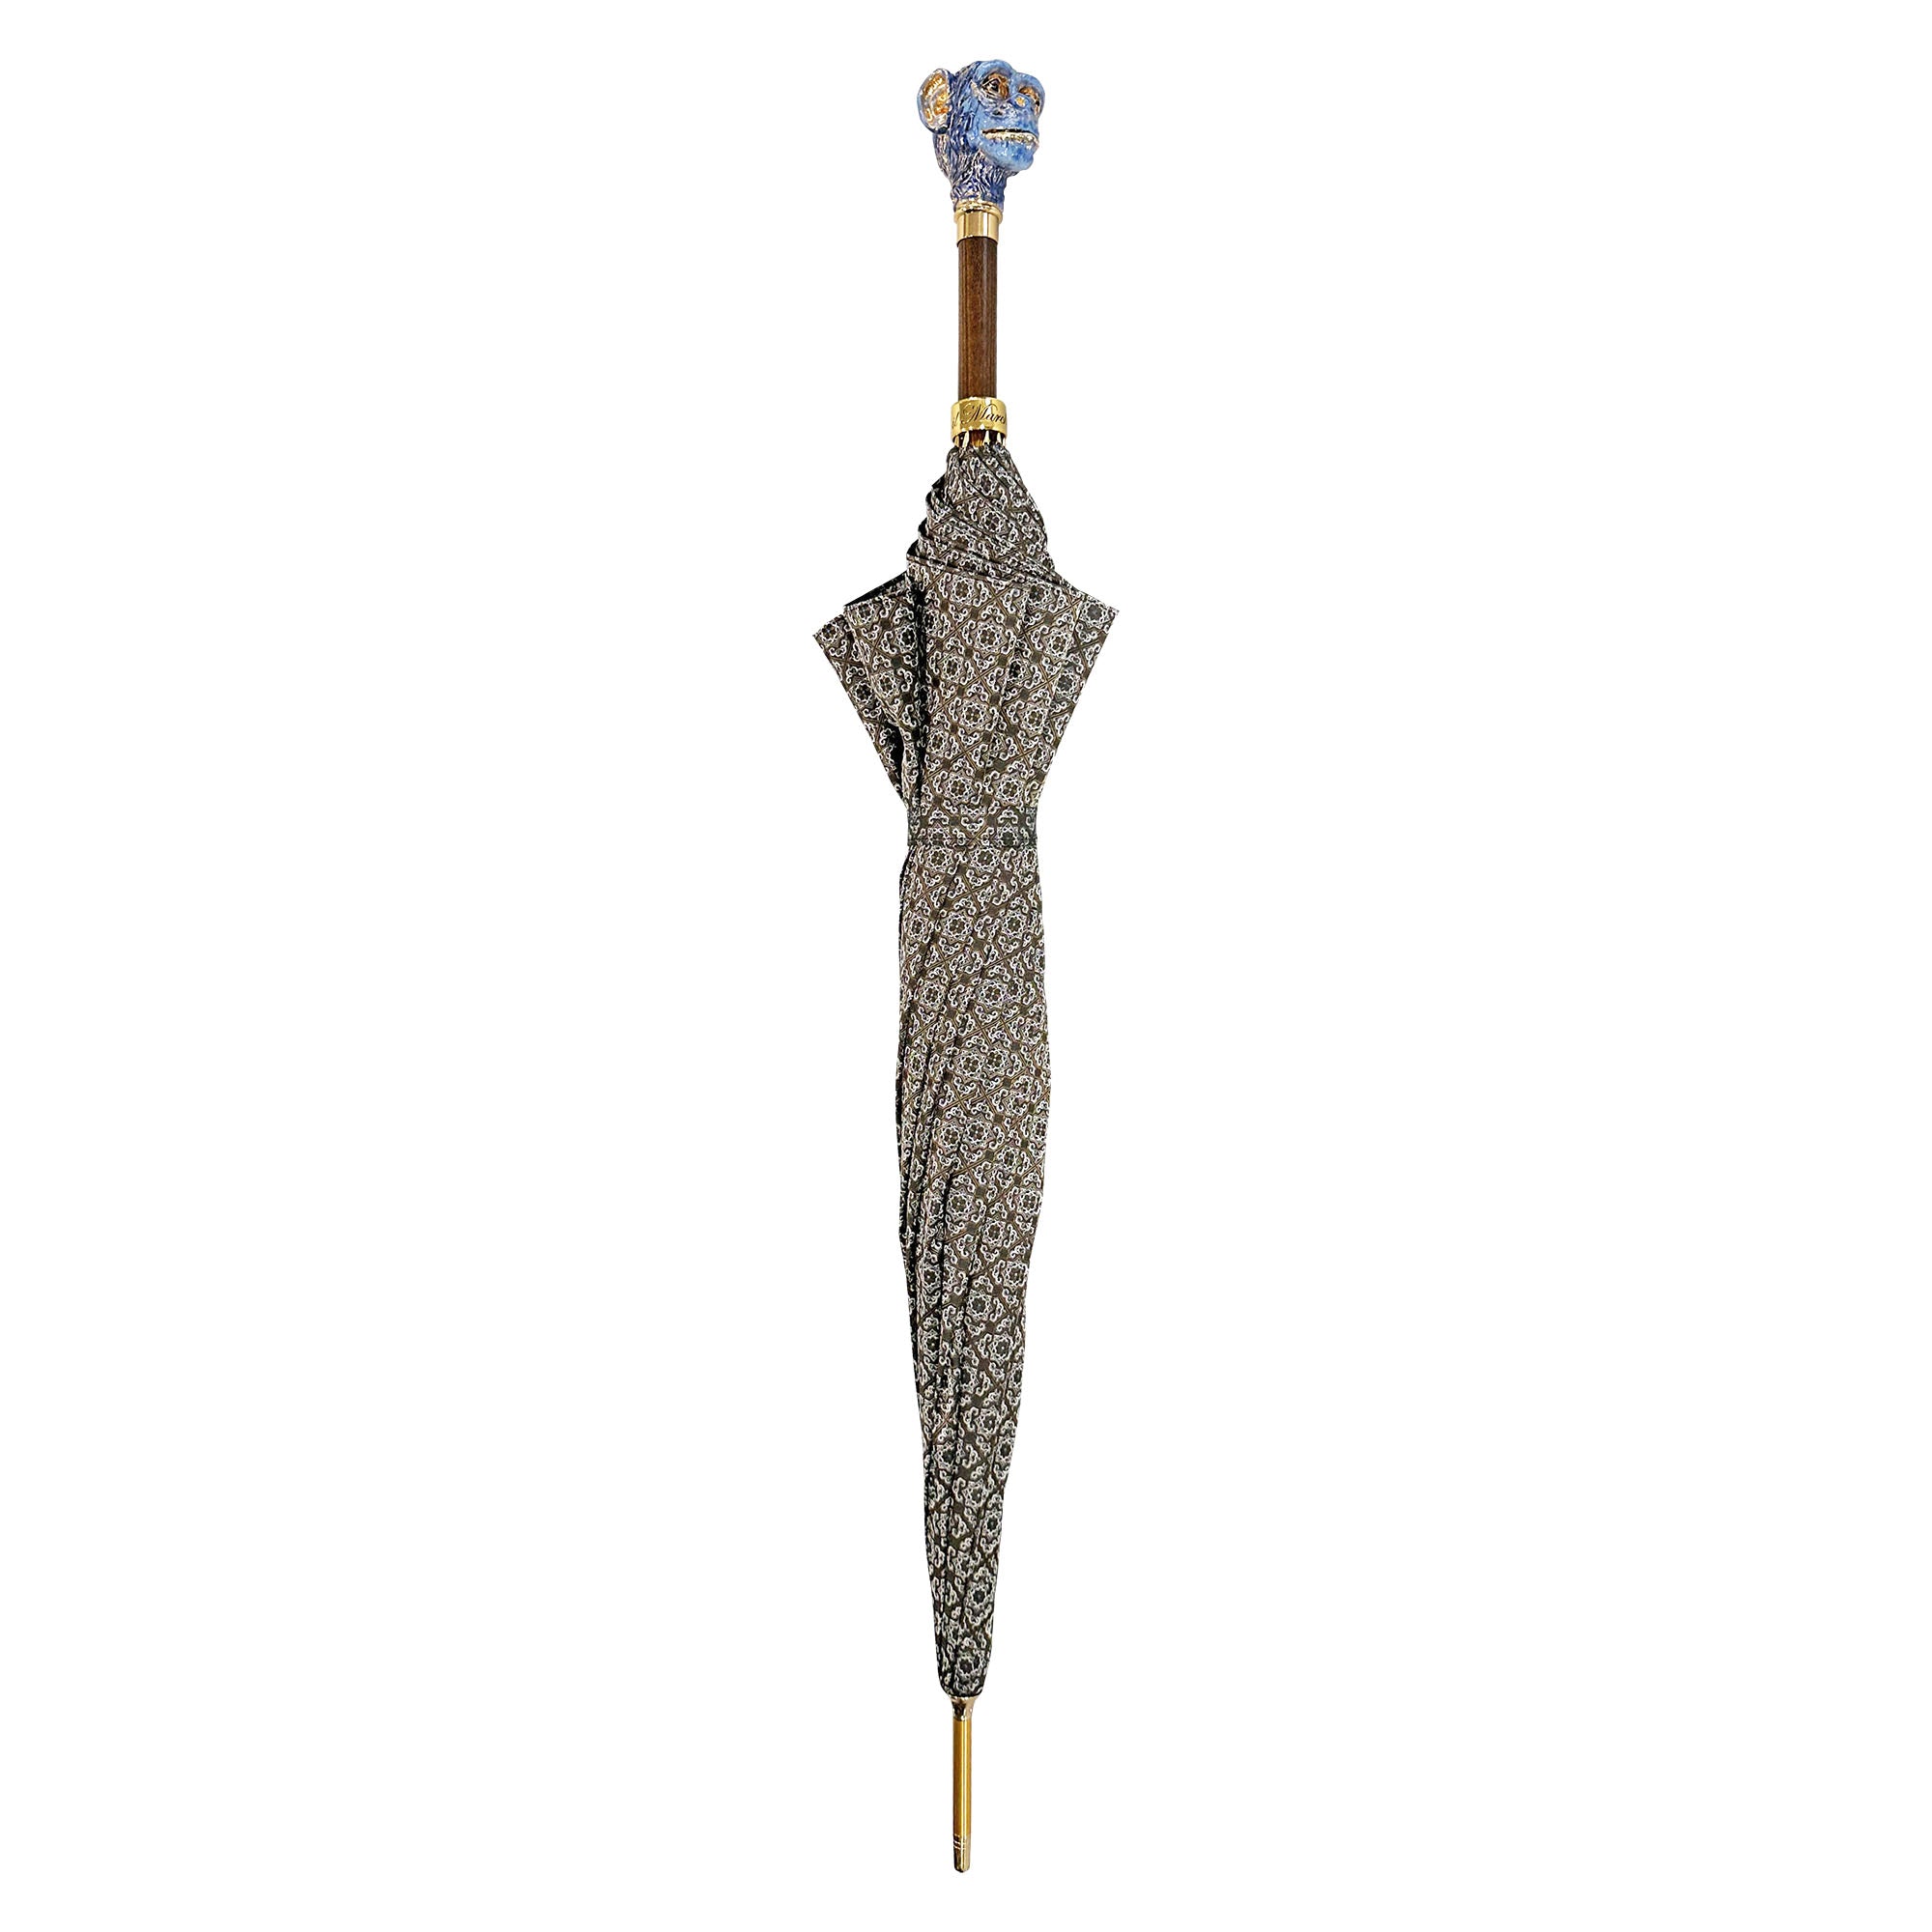 Original Monkey enameled handle - Handmade umbrella